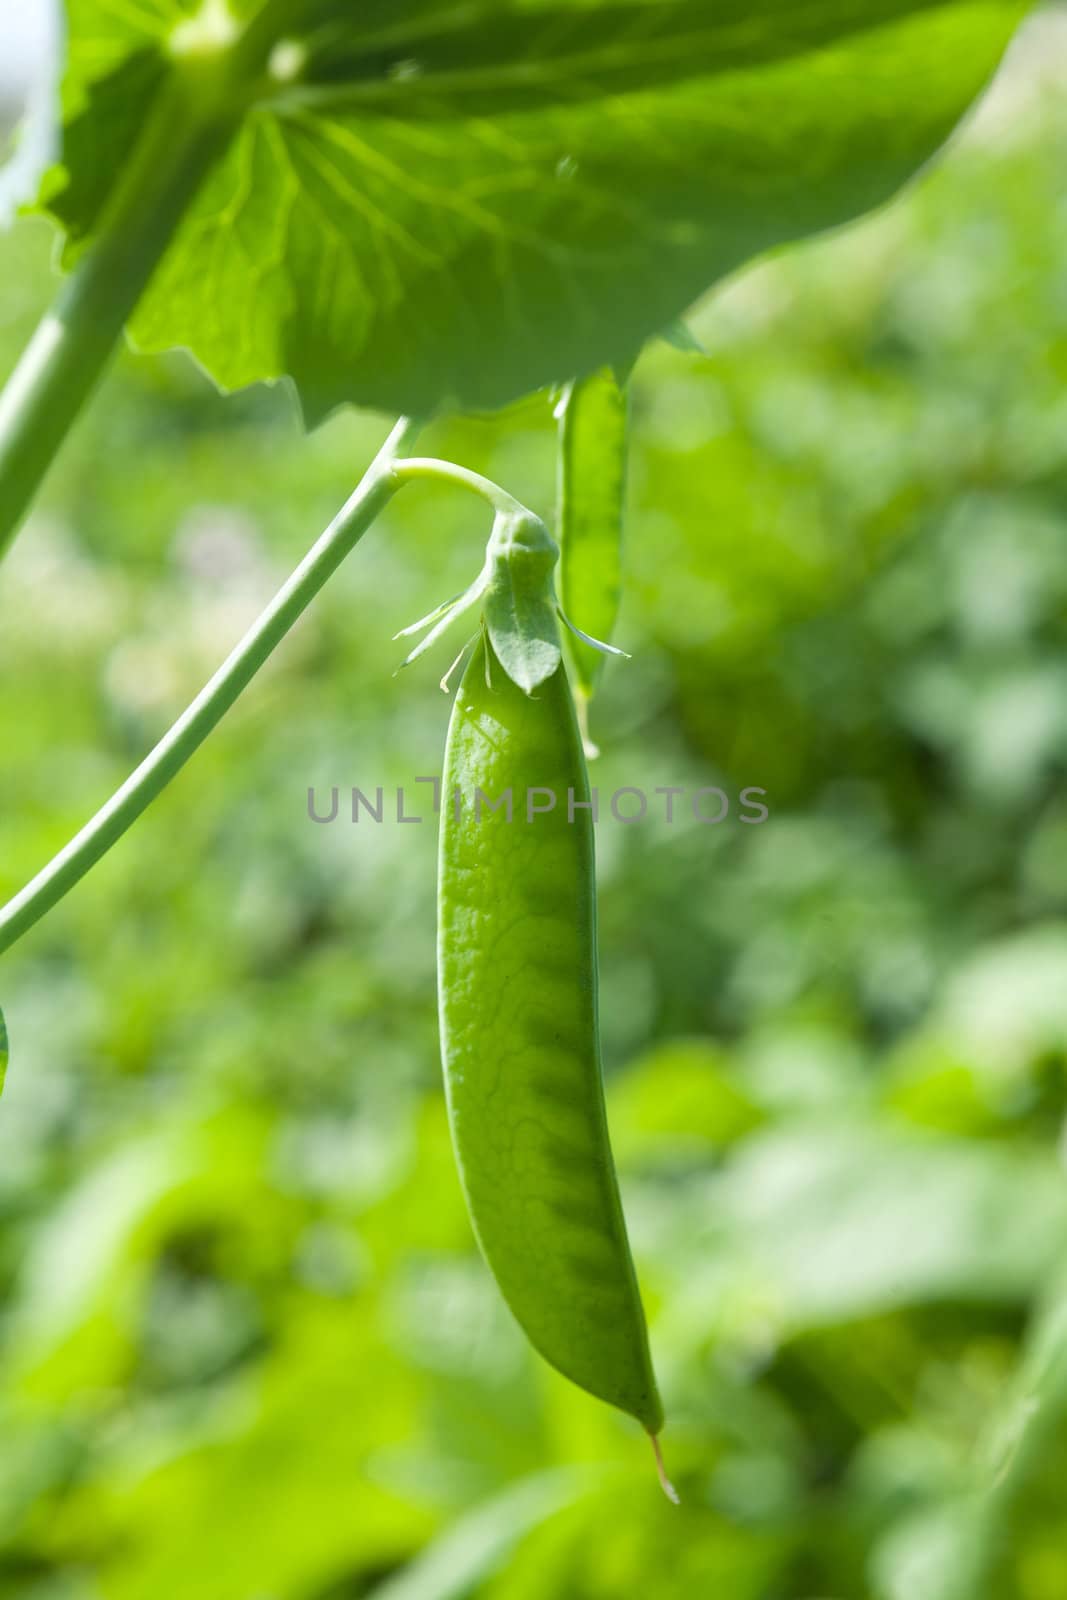 An image of a pod of fresh green bean